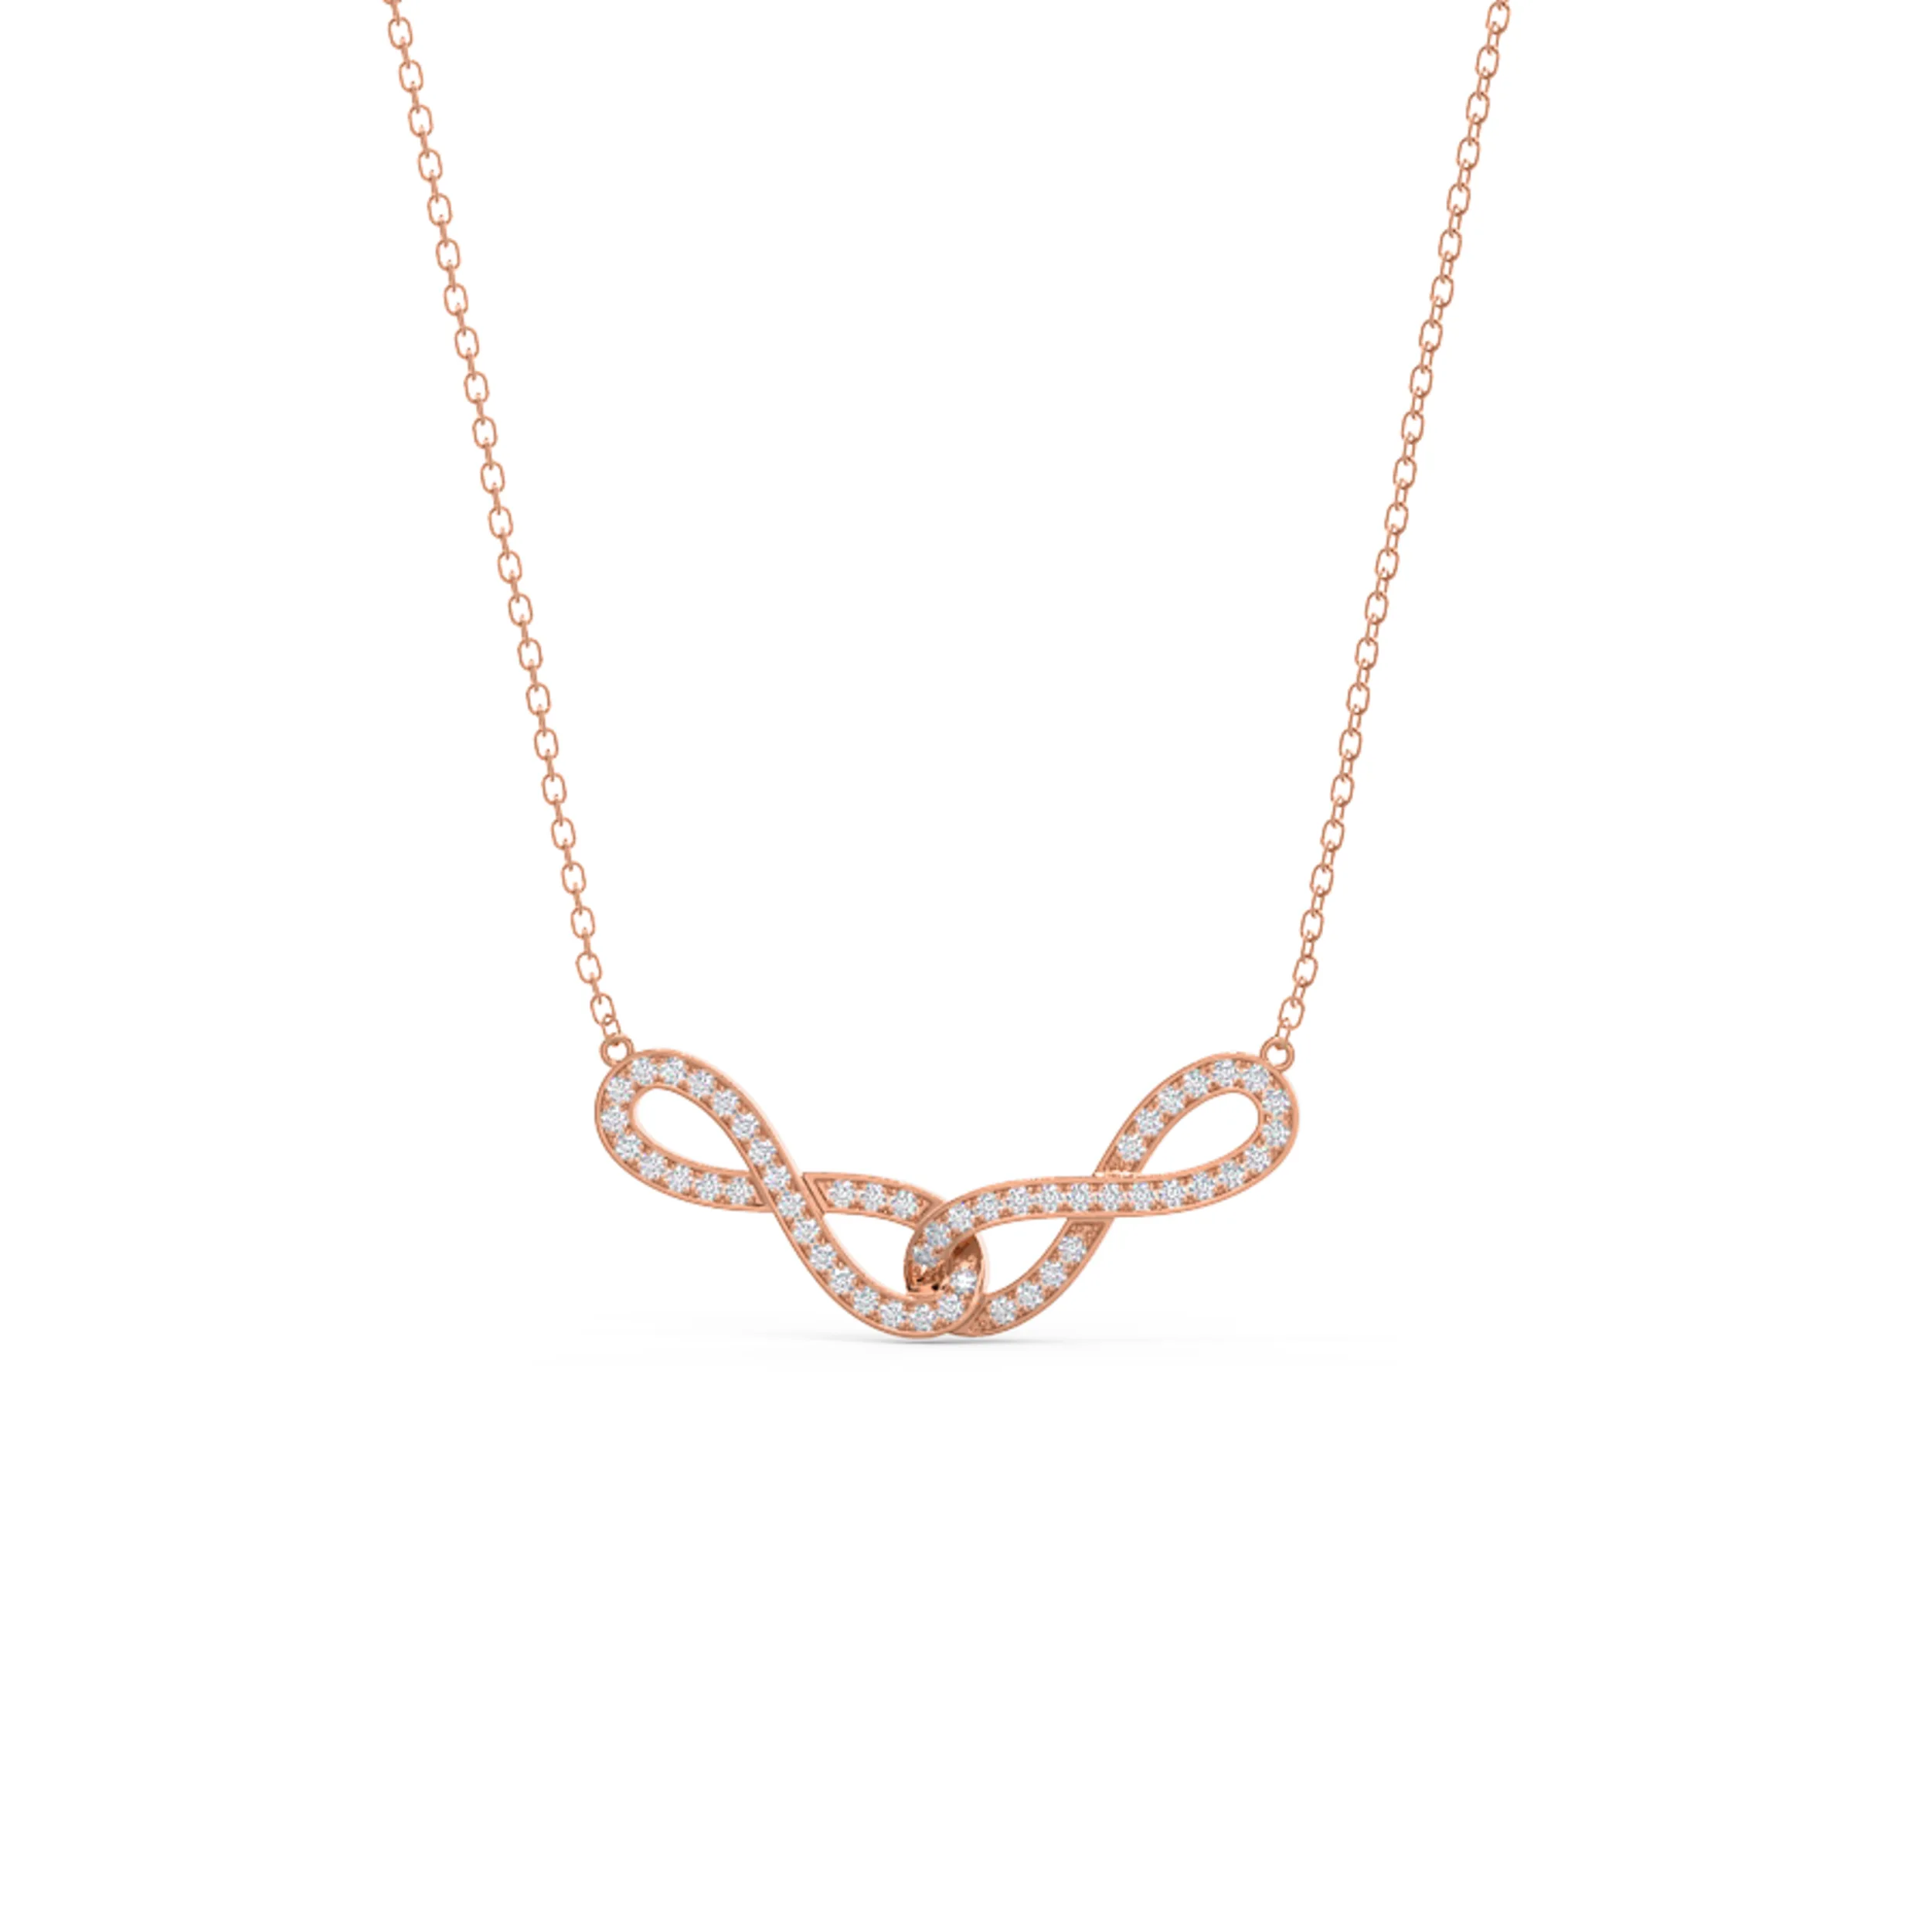 infinity-necklace-with-lab-diamonds-rose-gold_1574711972559-RK5U68IG68ET9W6ZNDUS